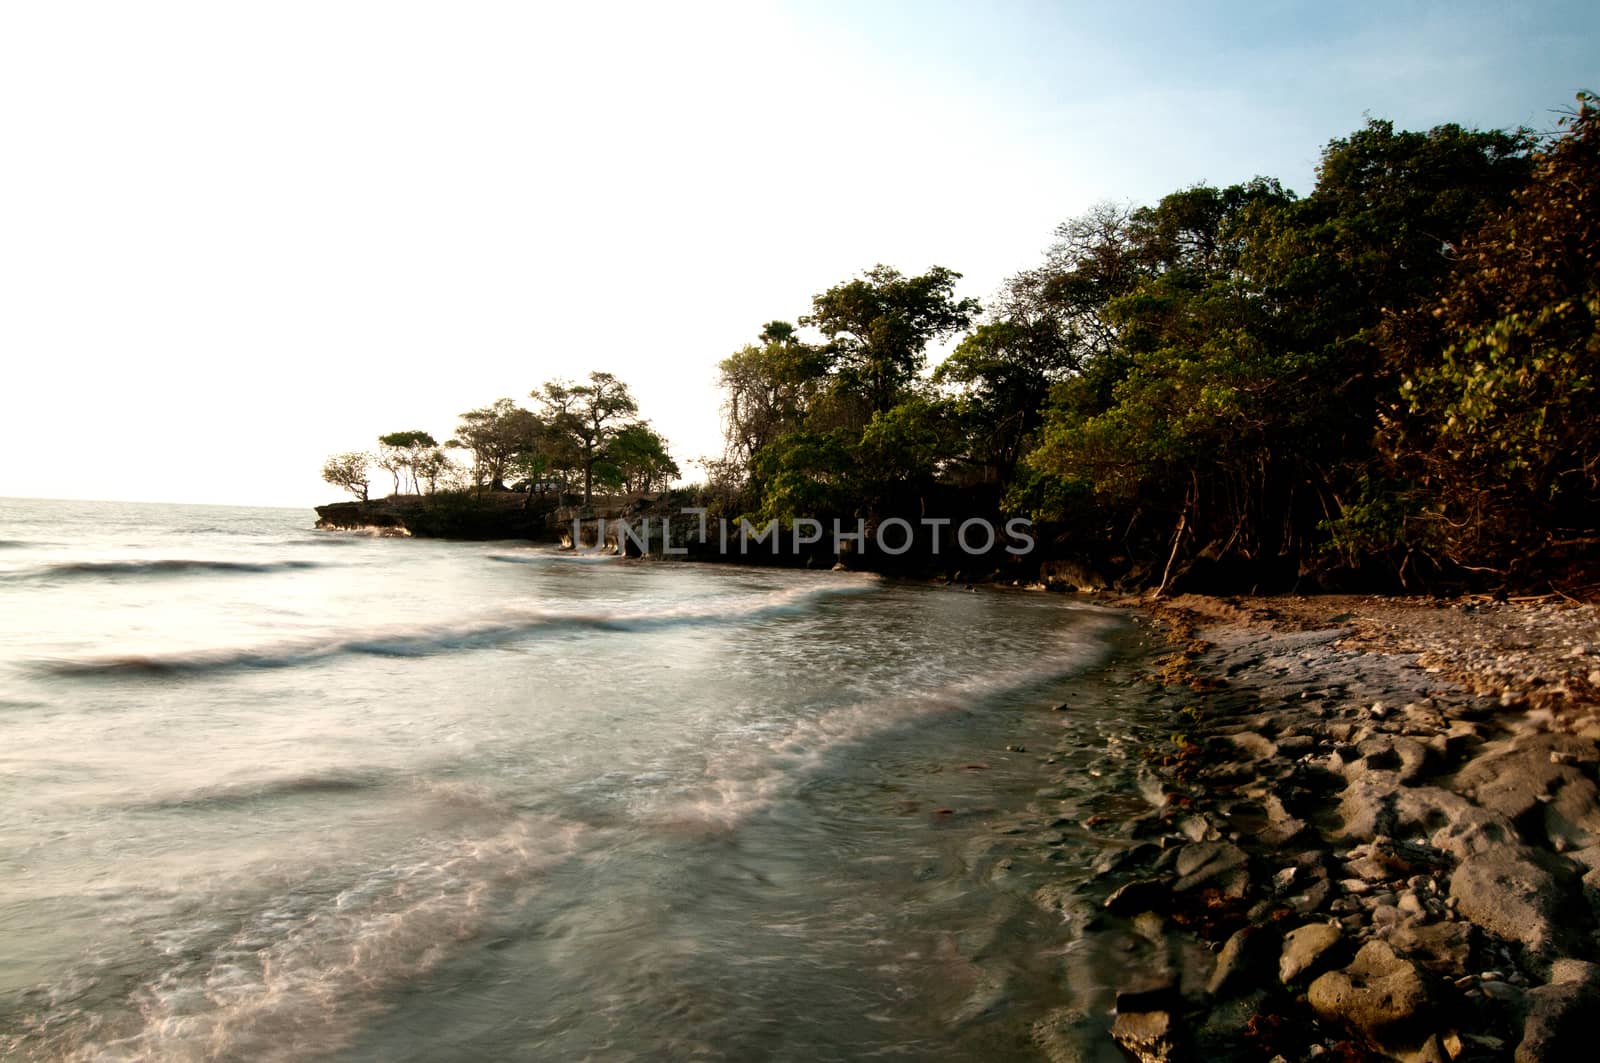 Topejawa beach at Takalar Indonesia by antonihalim